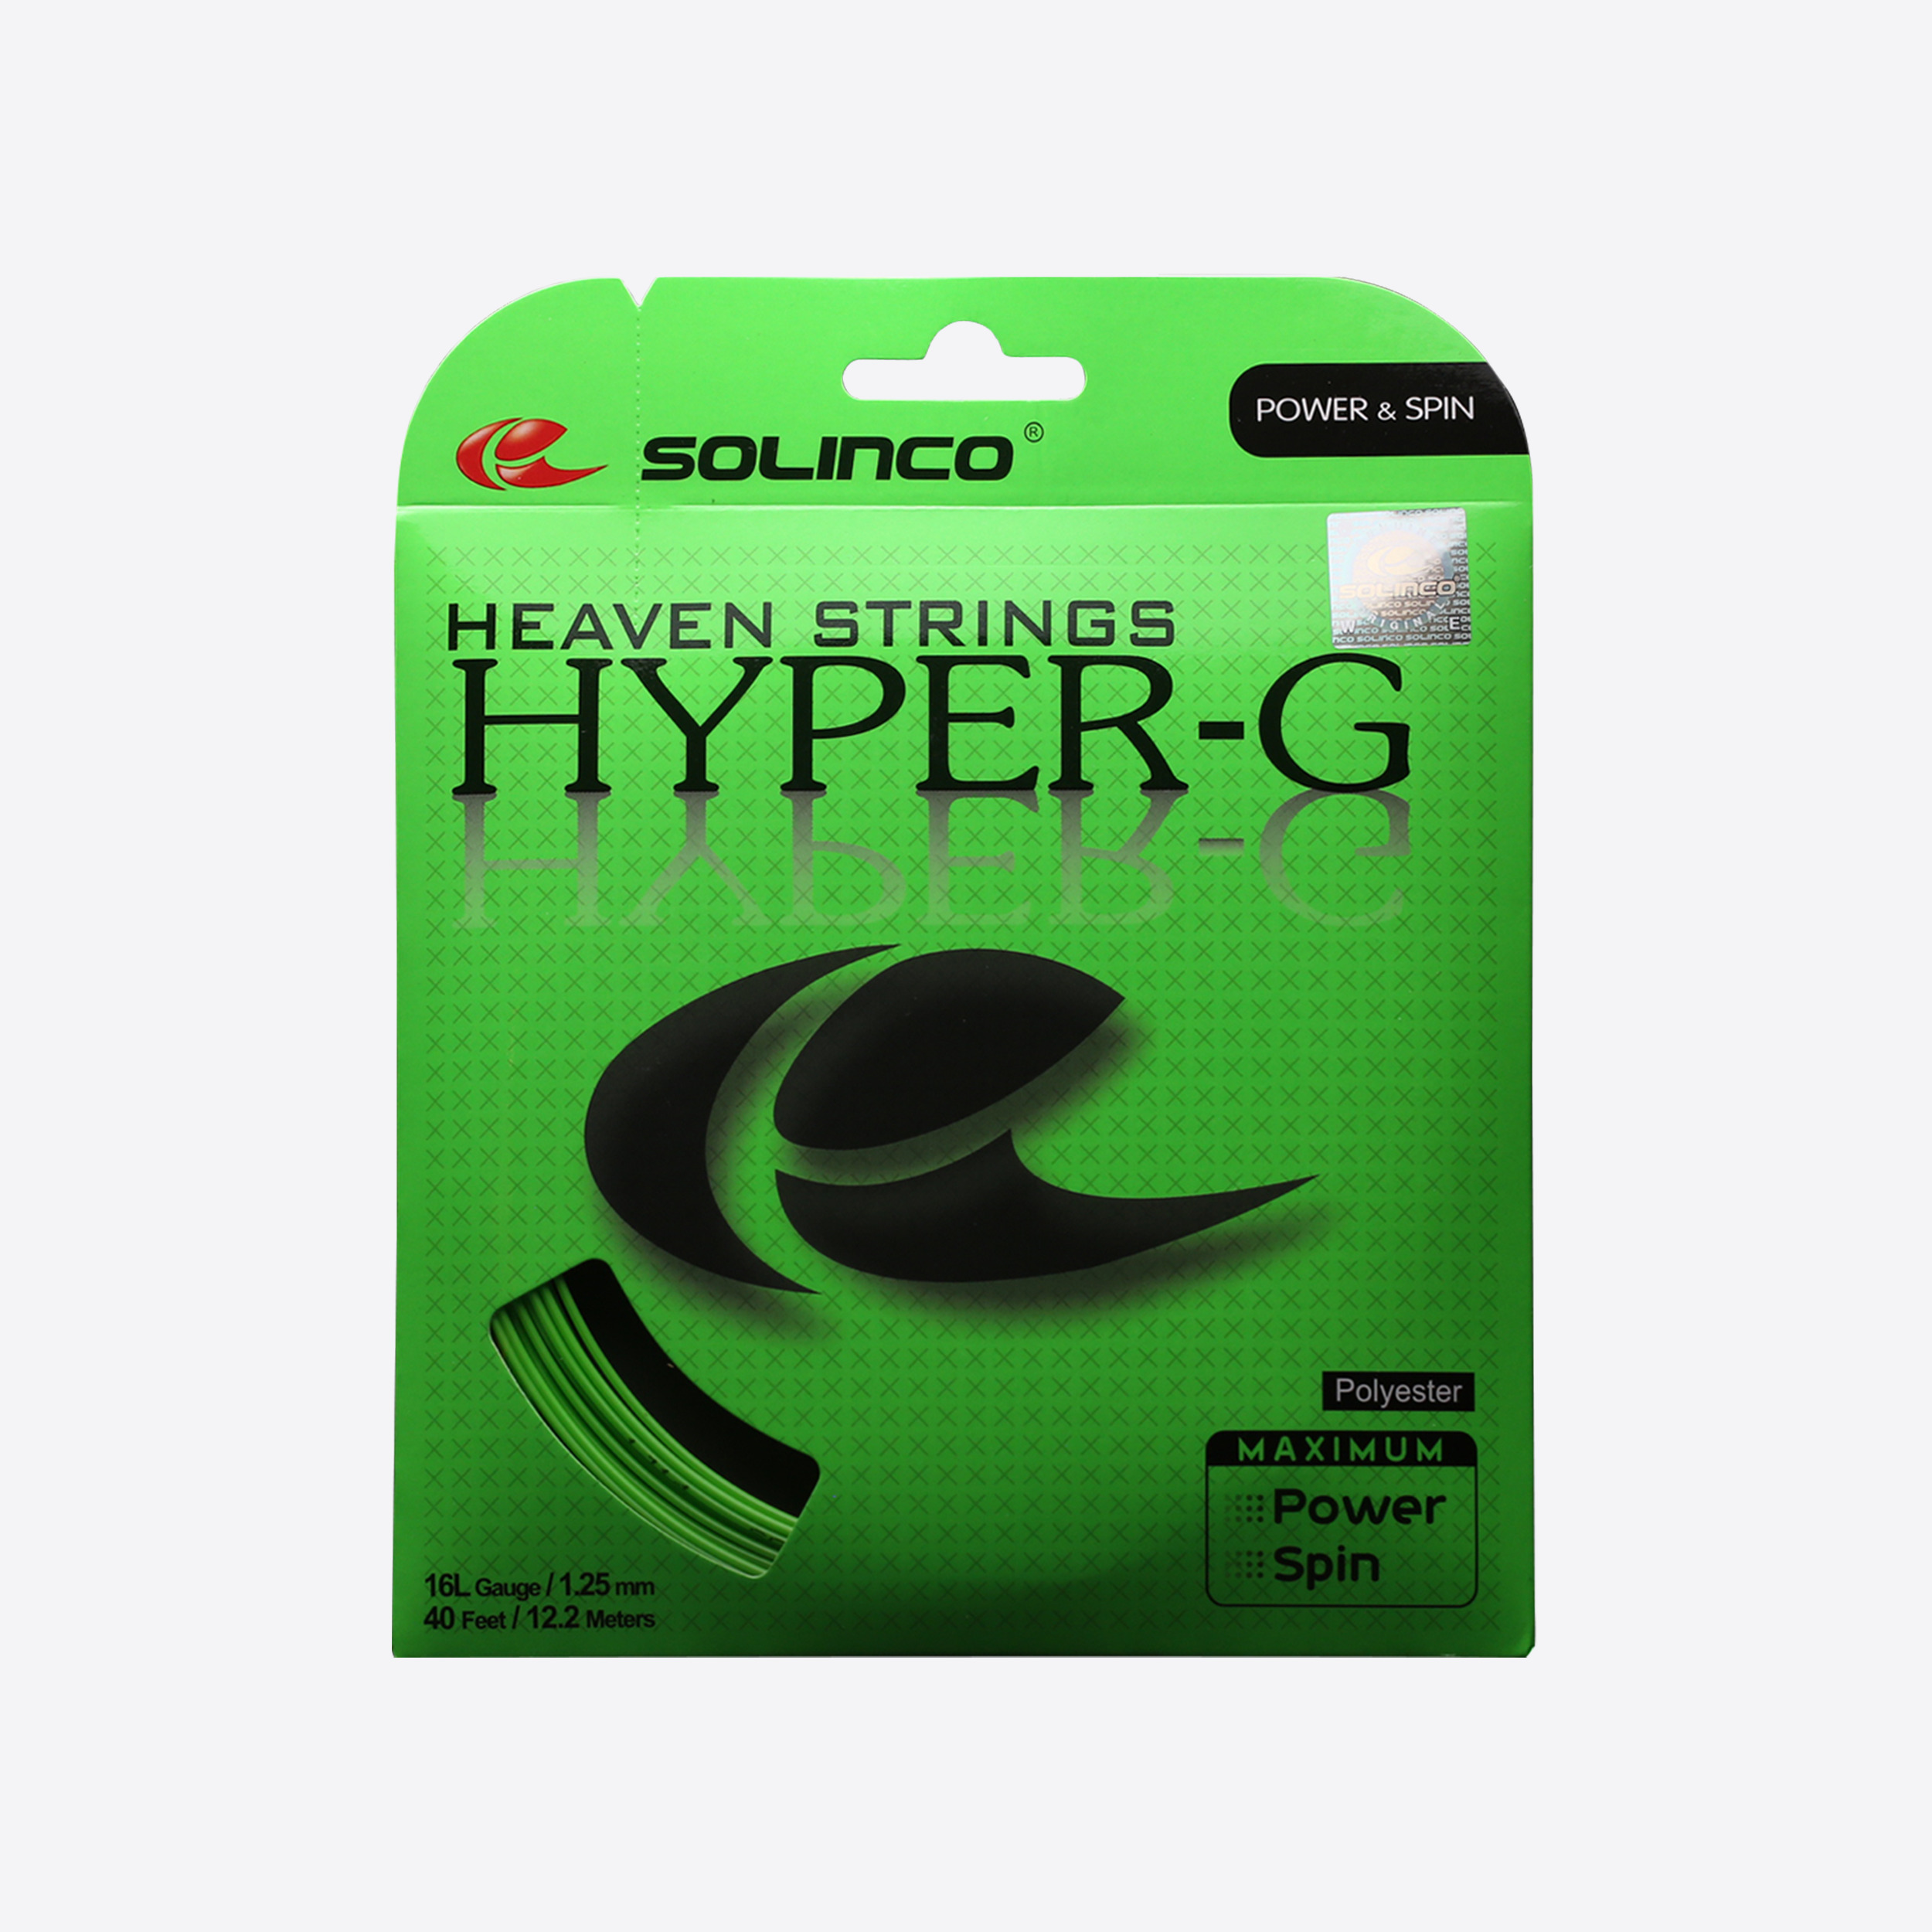 Solinco Hyper G tennis string, Sports Equipment, Sports & Games